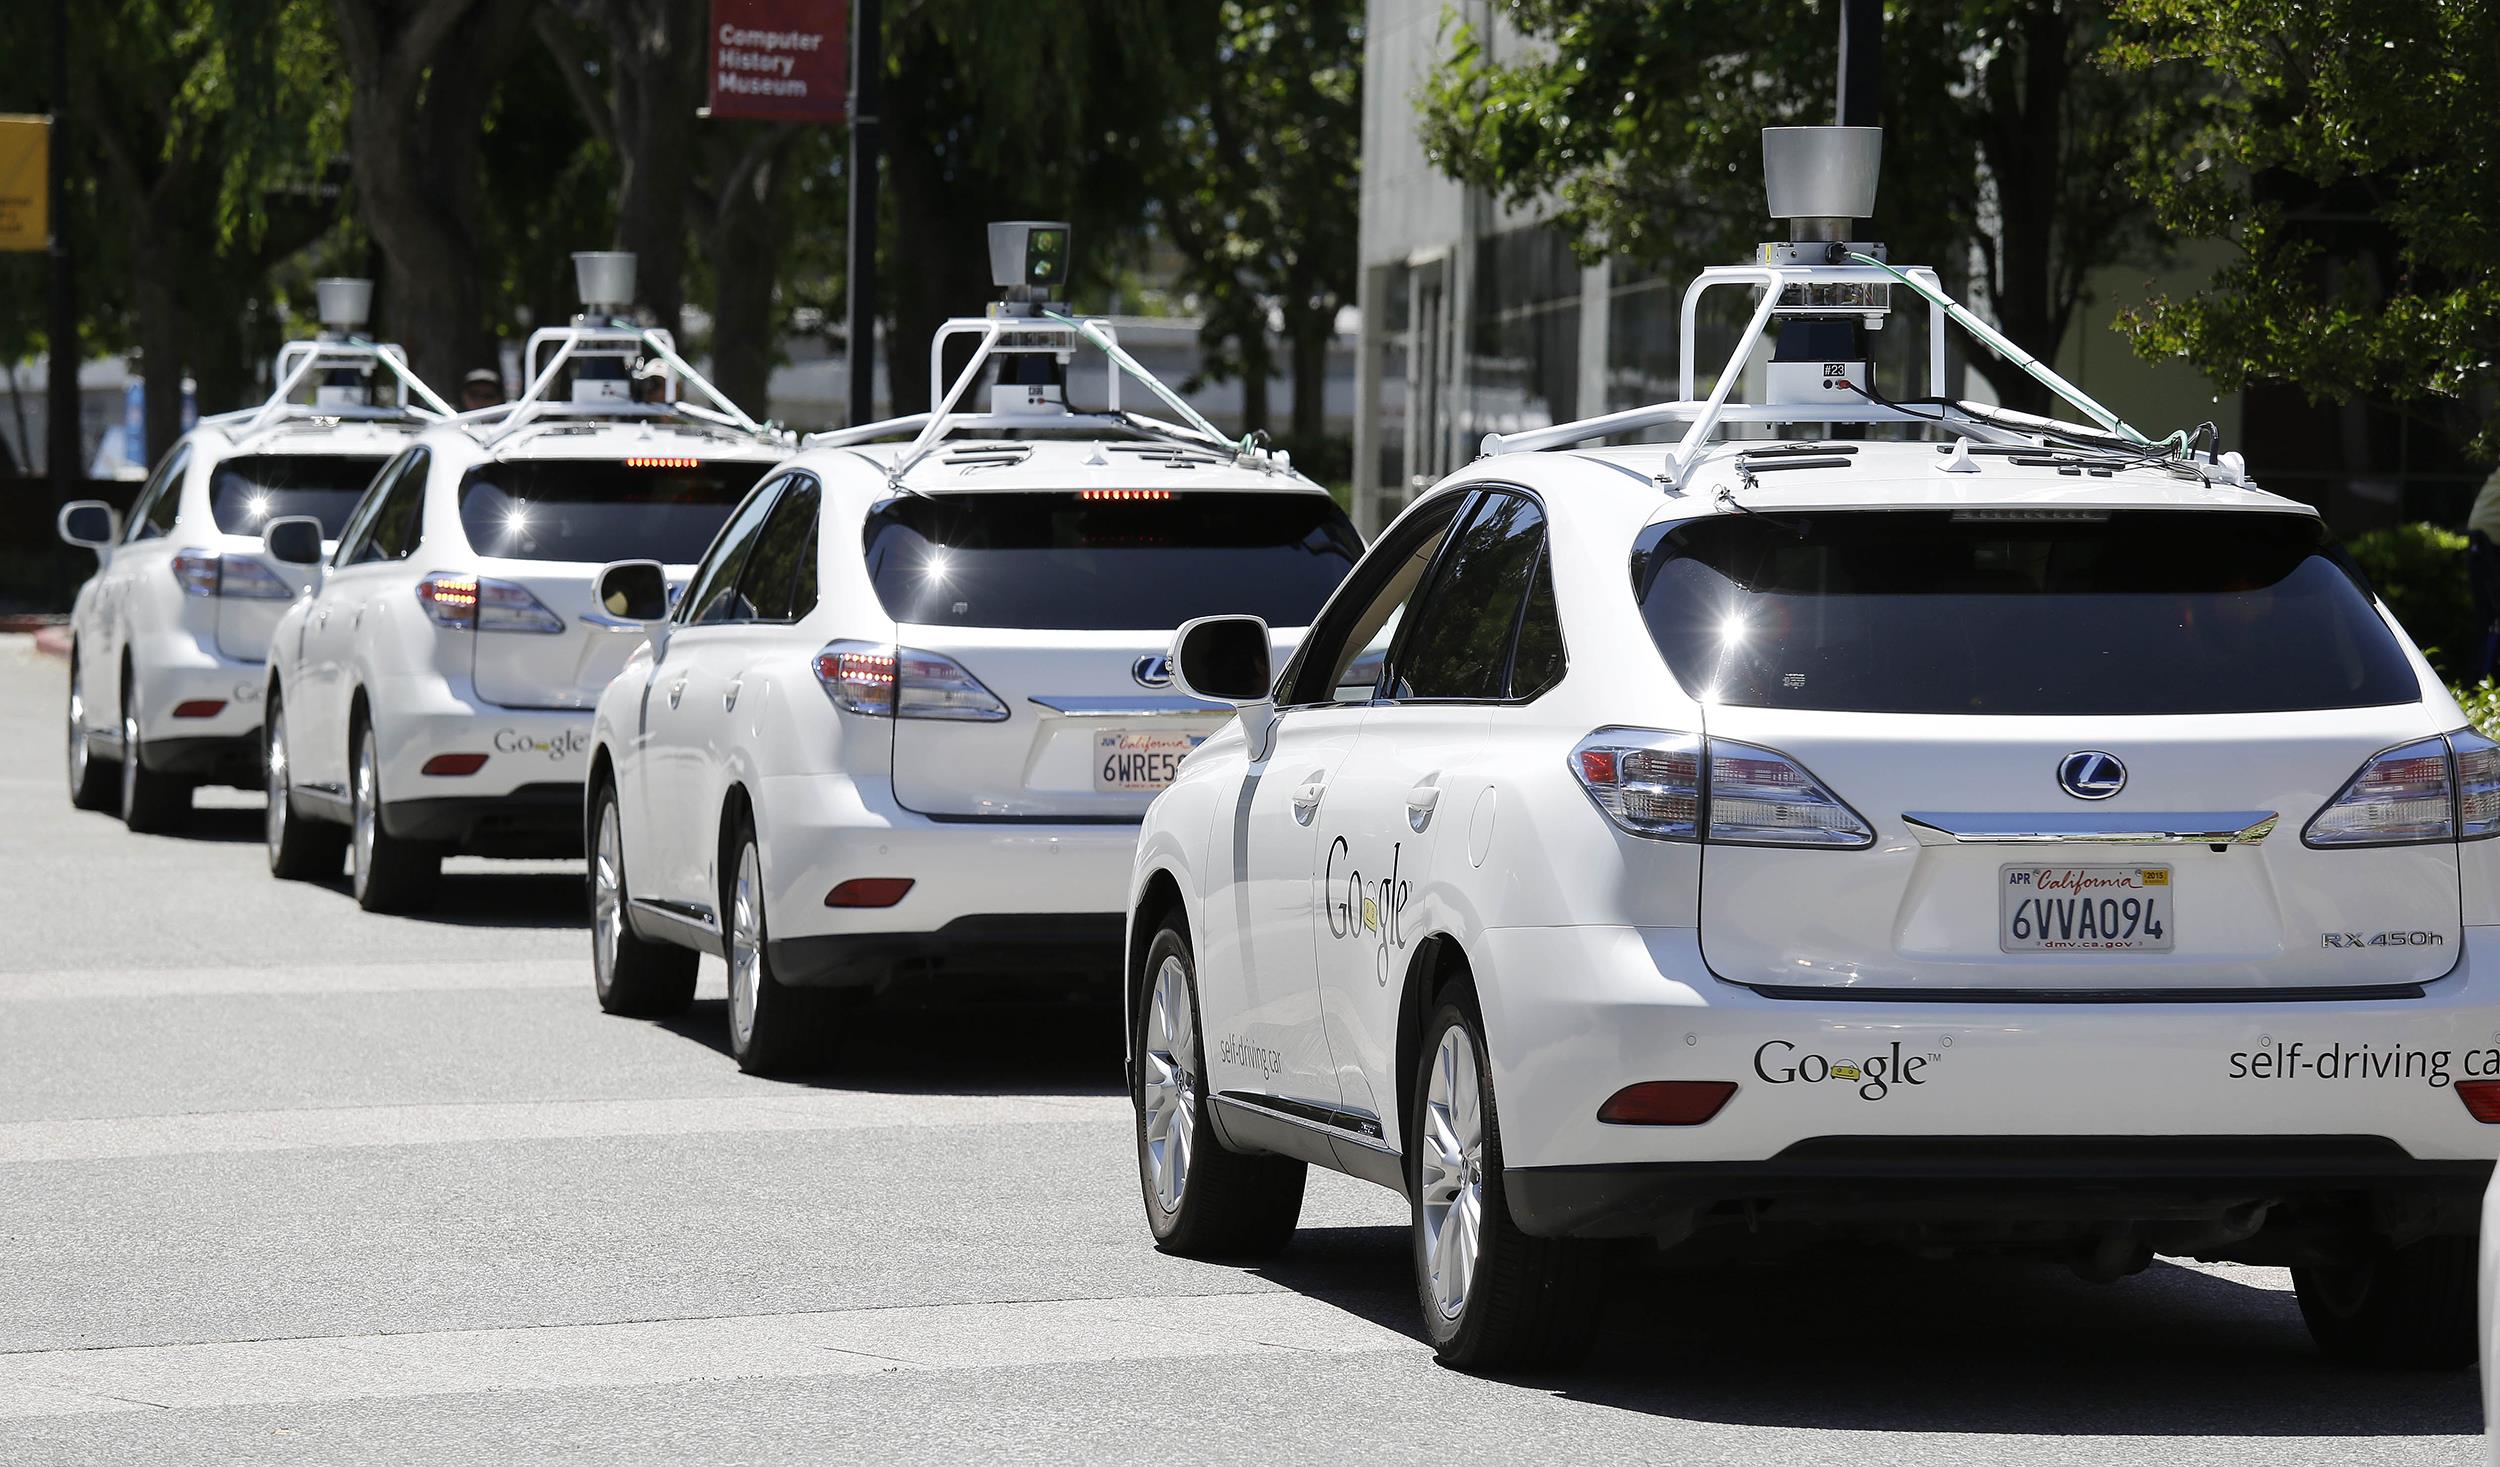 Google's Self Driving Cars [image source]